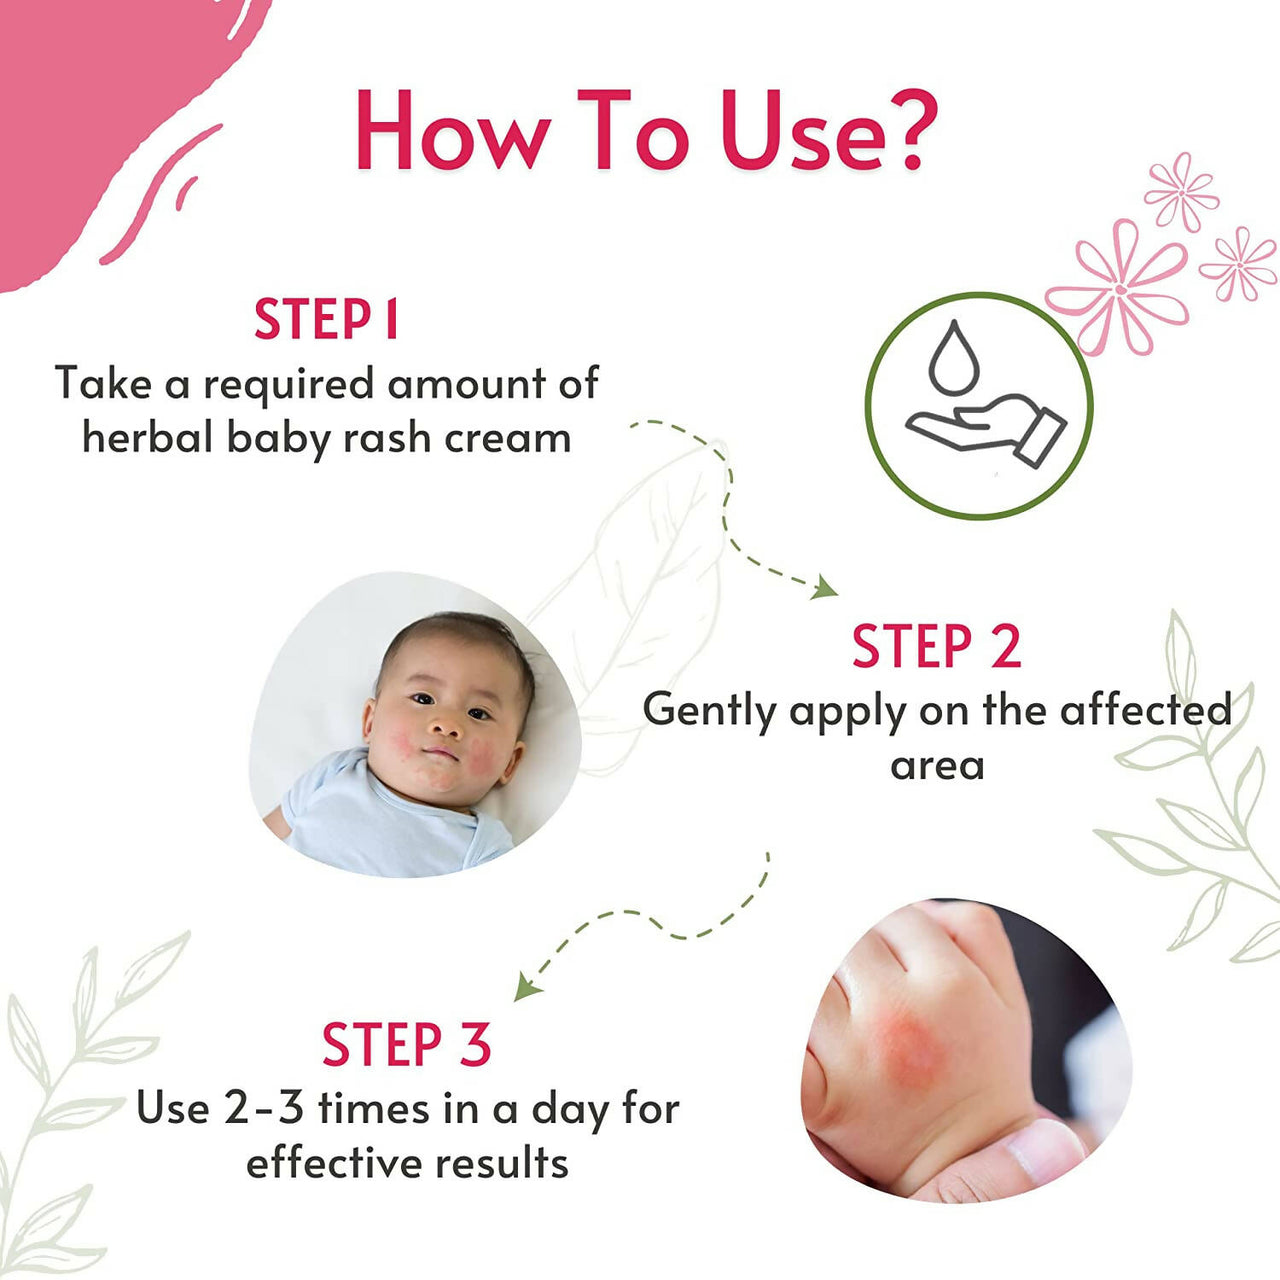 Pokonut Herbal Baby Diaper Rash Free Cream - Distacart